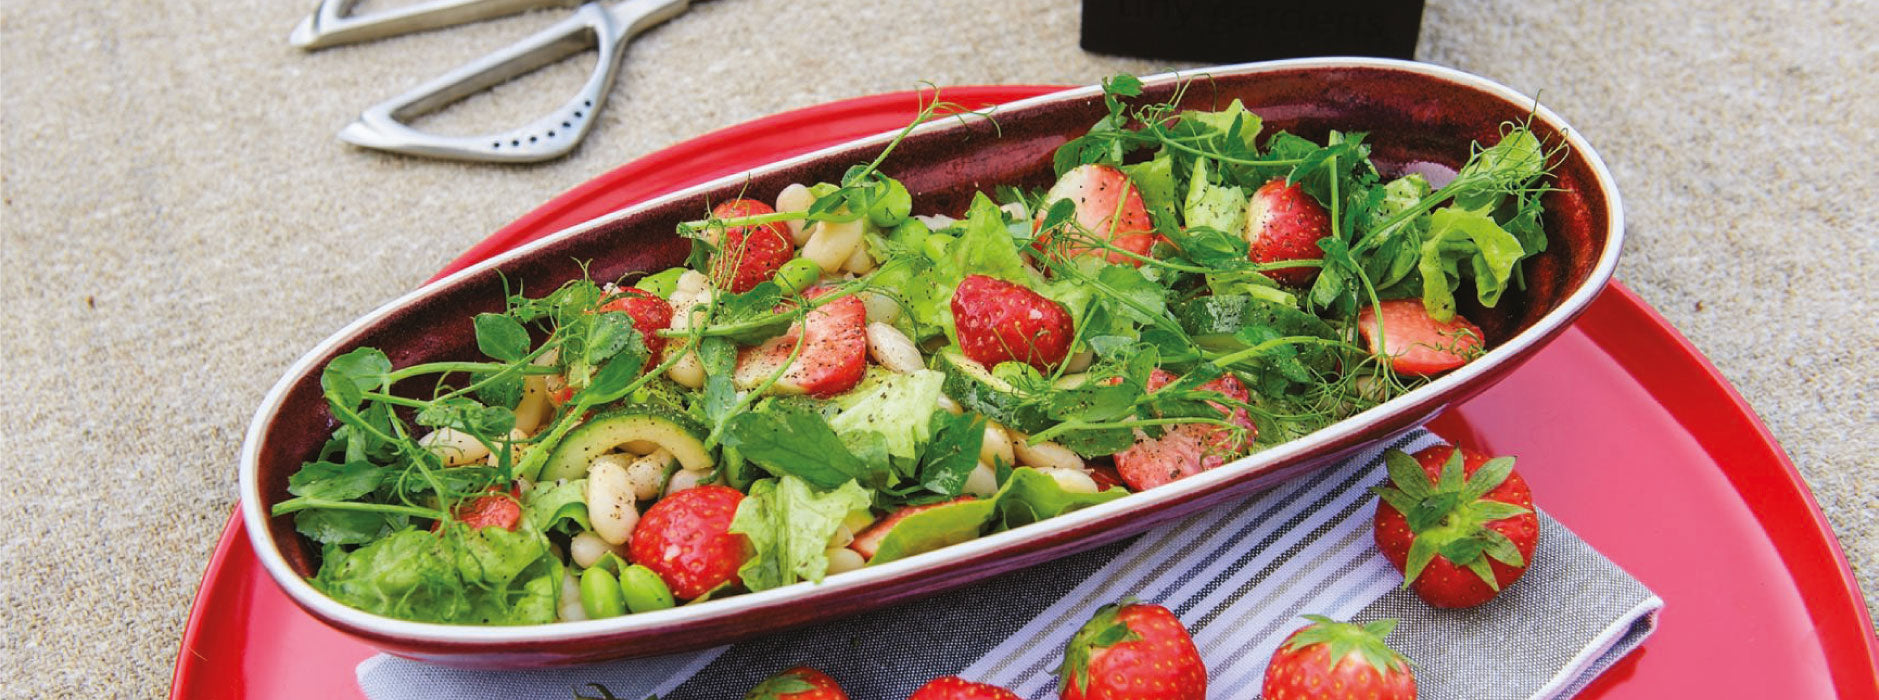 Salat med limabønner, jordbær og ærtespirer